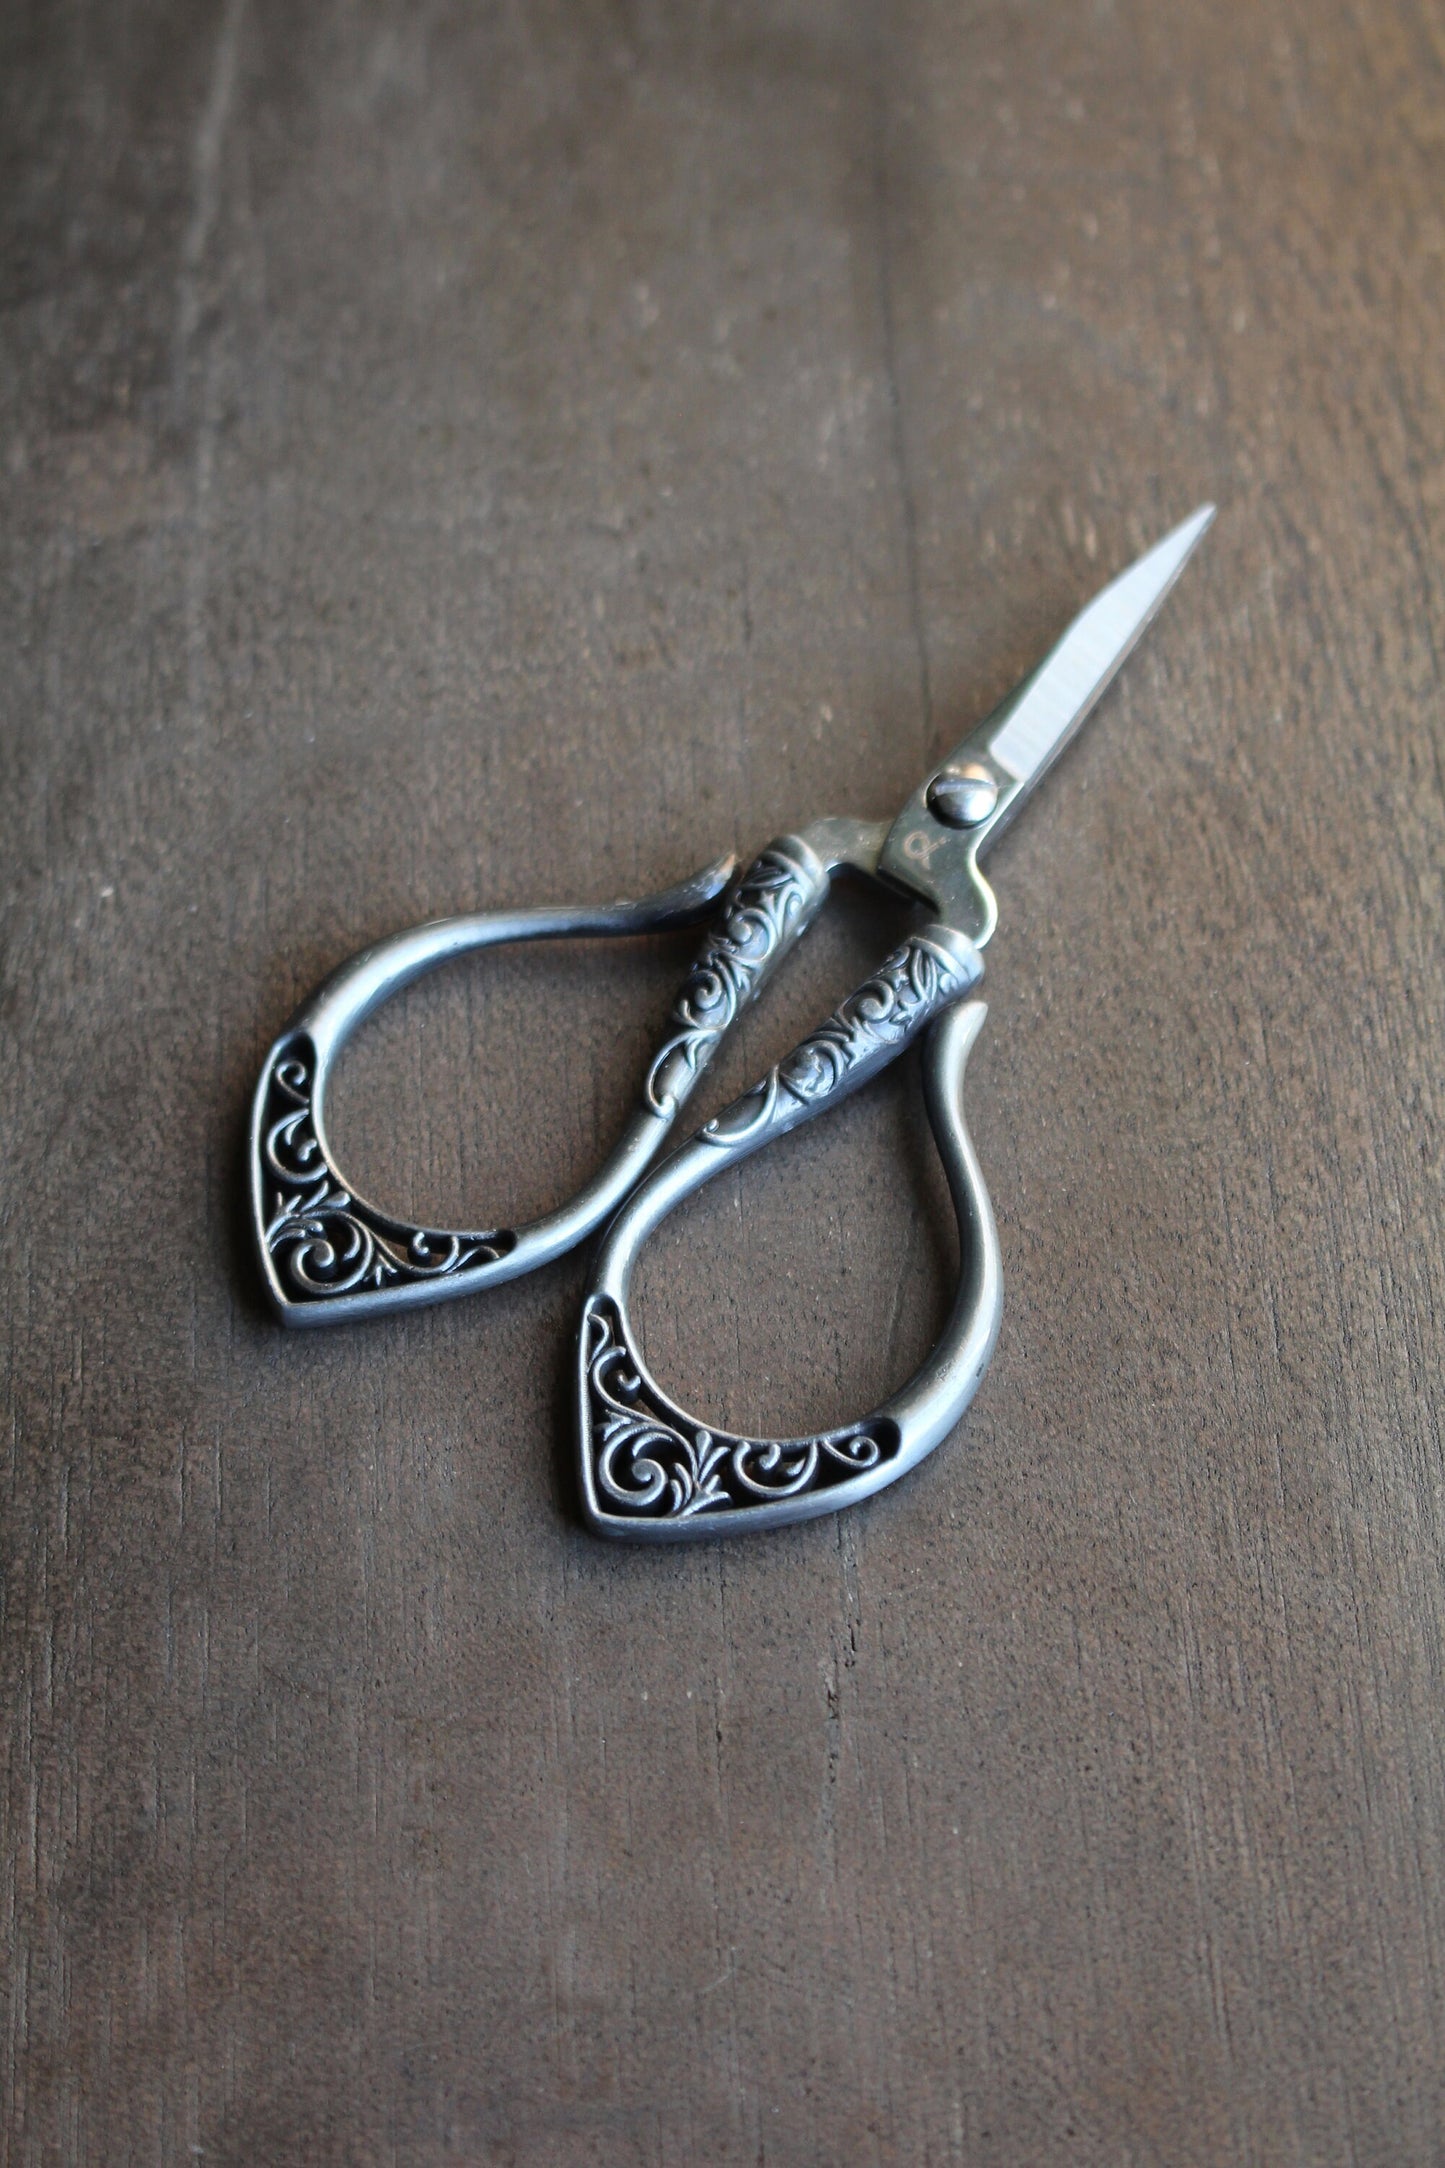 Secret Garden embroidery scissors in gunmetal gray